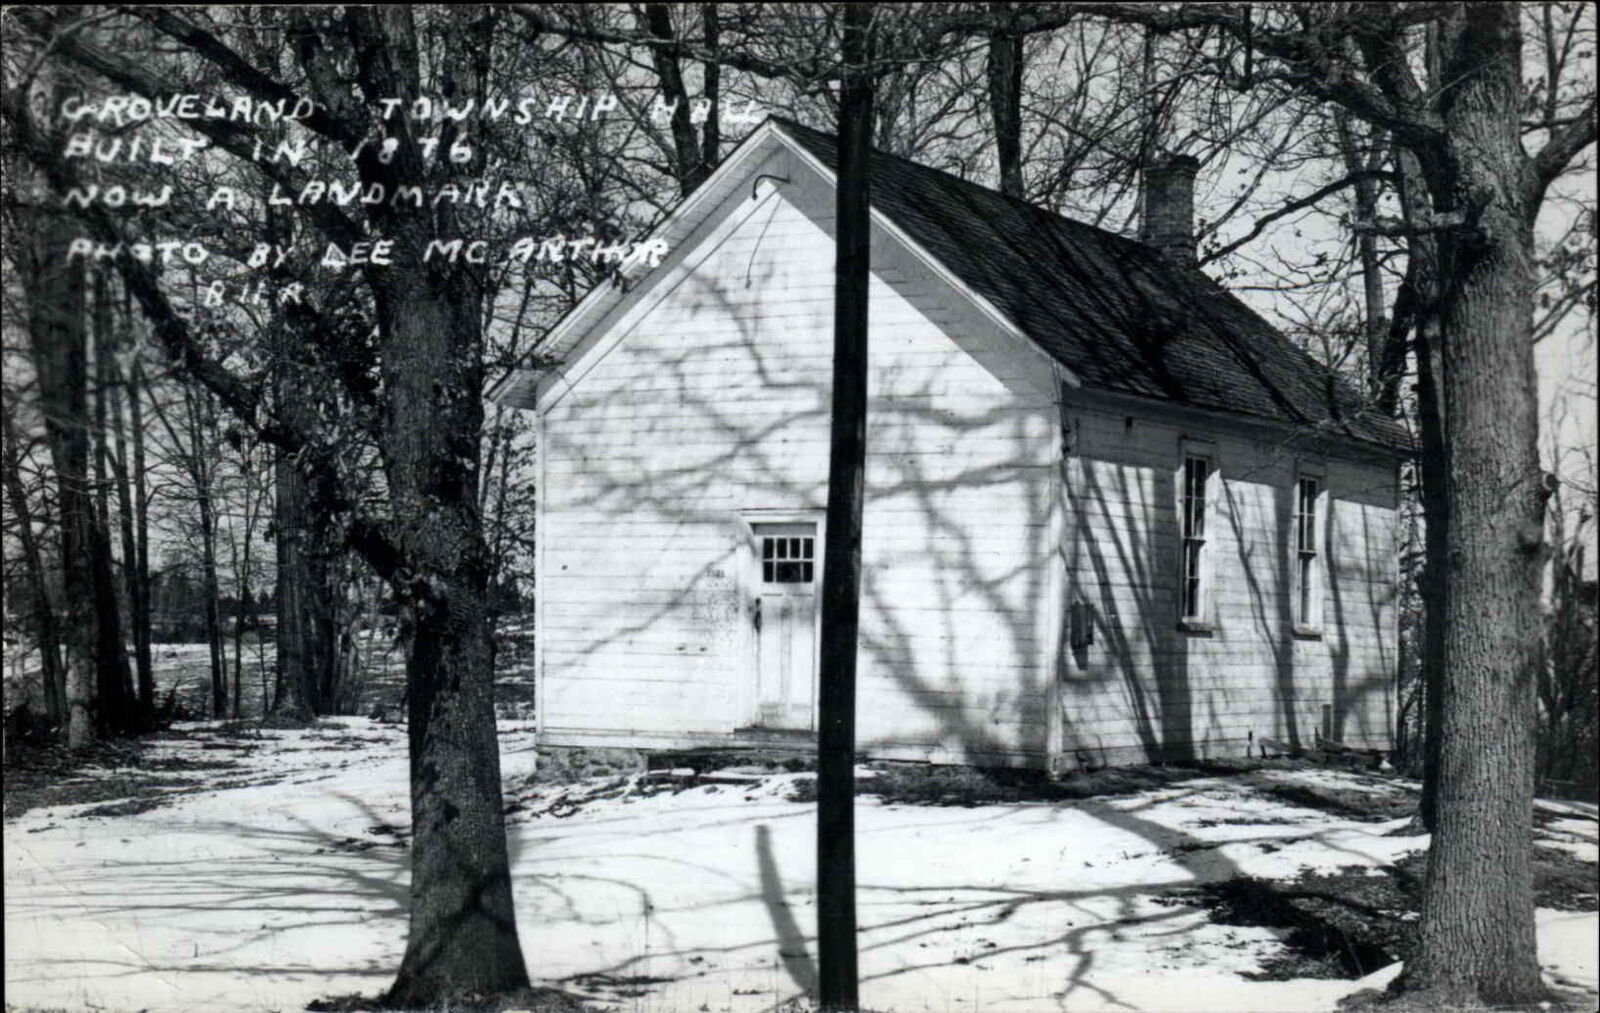 Groveland Mass MA ? Township Hall McArthur Real Photo Vintage Postcard